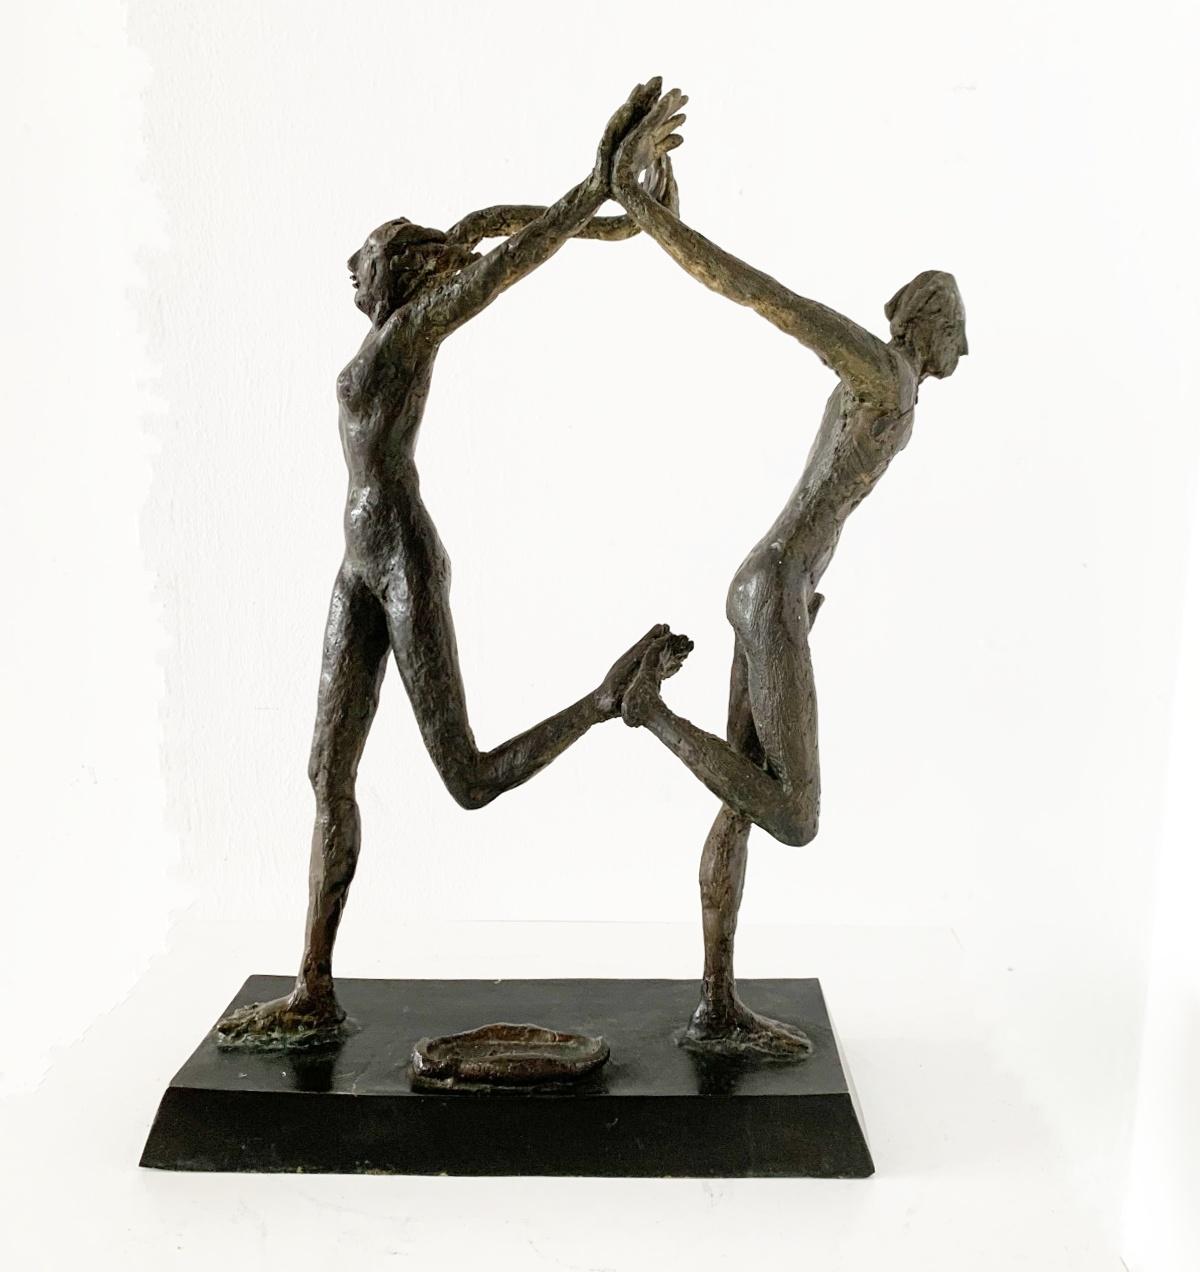 Giuseppe del Debbio Figurative Sculpture - Dancing together. Contemporary figurative bronze sculpture, Italian artist